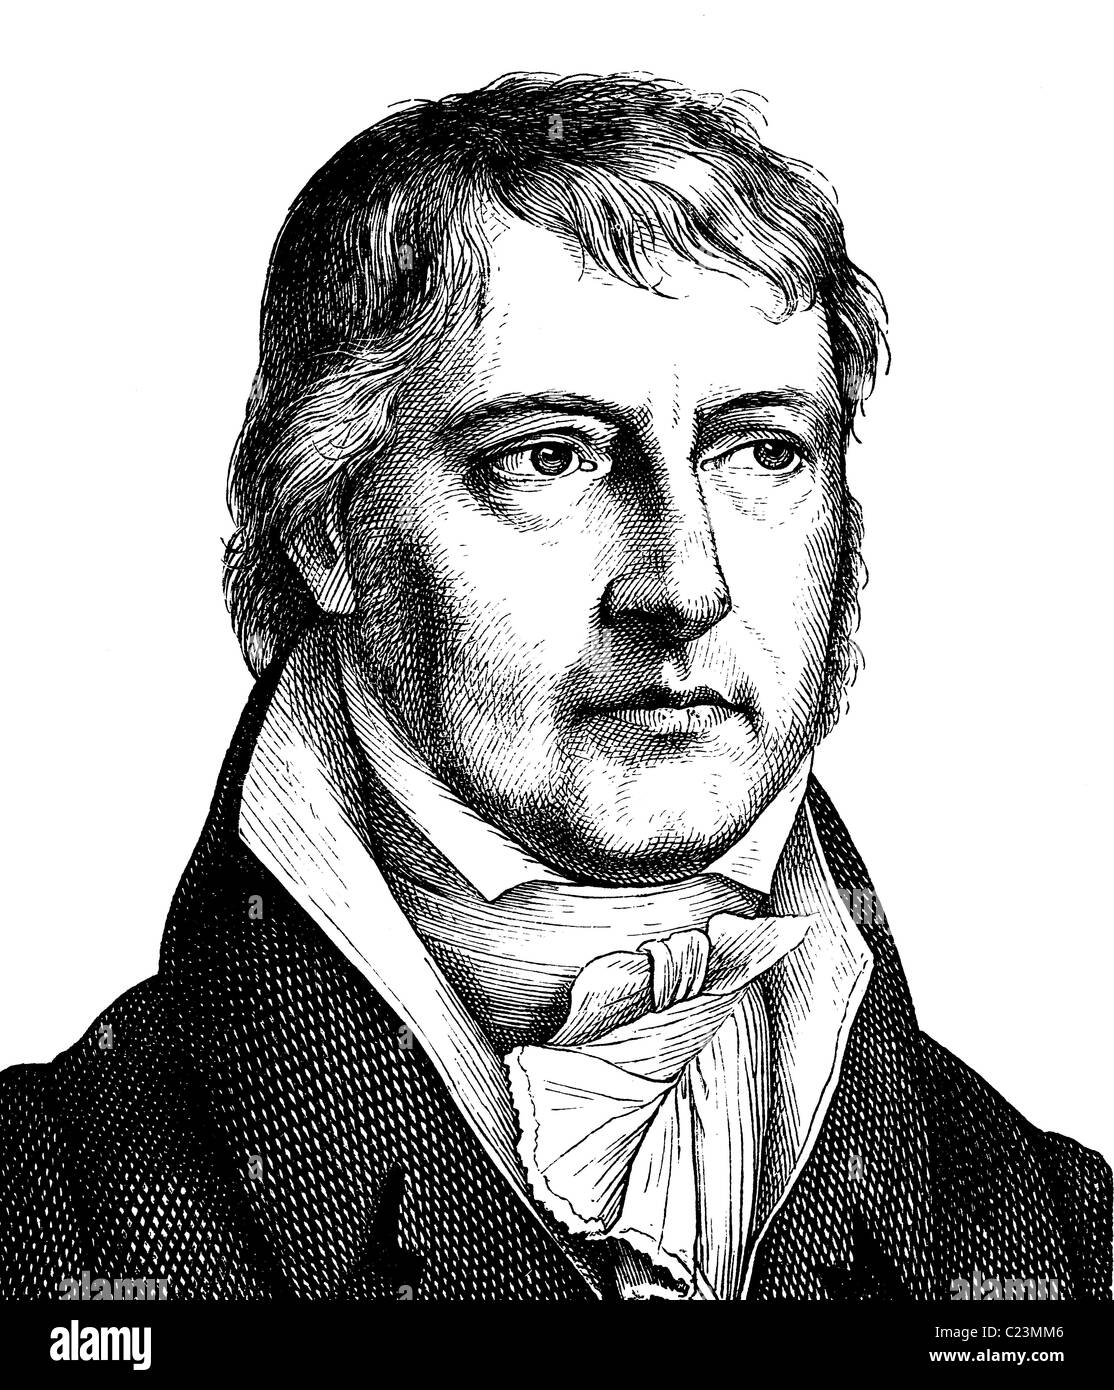 Digital improved image of Georg Wilhelm Friedrich Hegel, 1770 - 1831, German philosopher, portrait, historical illustration Stock Photo